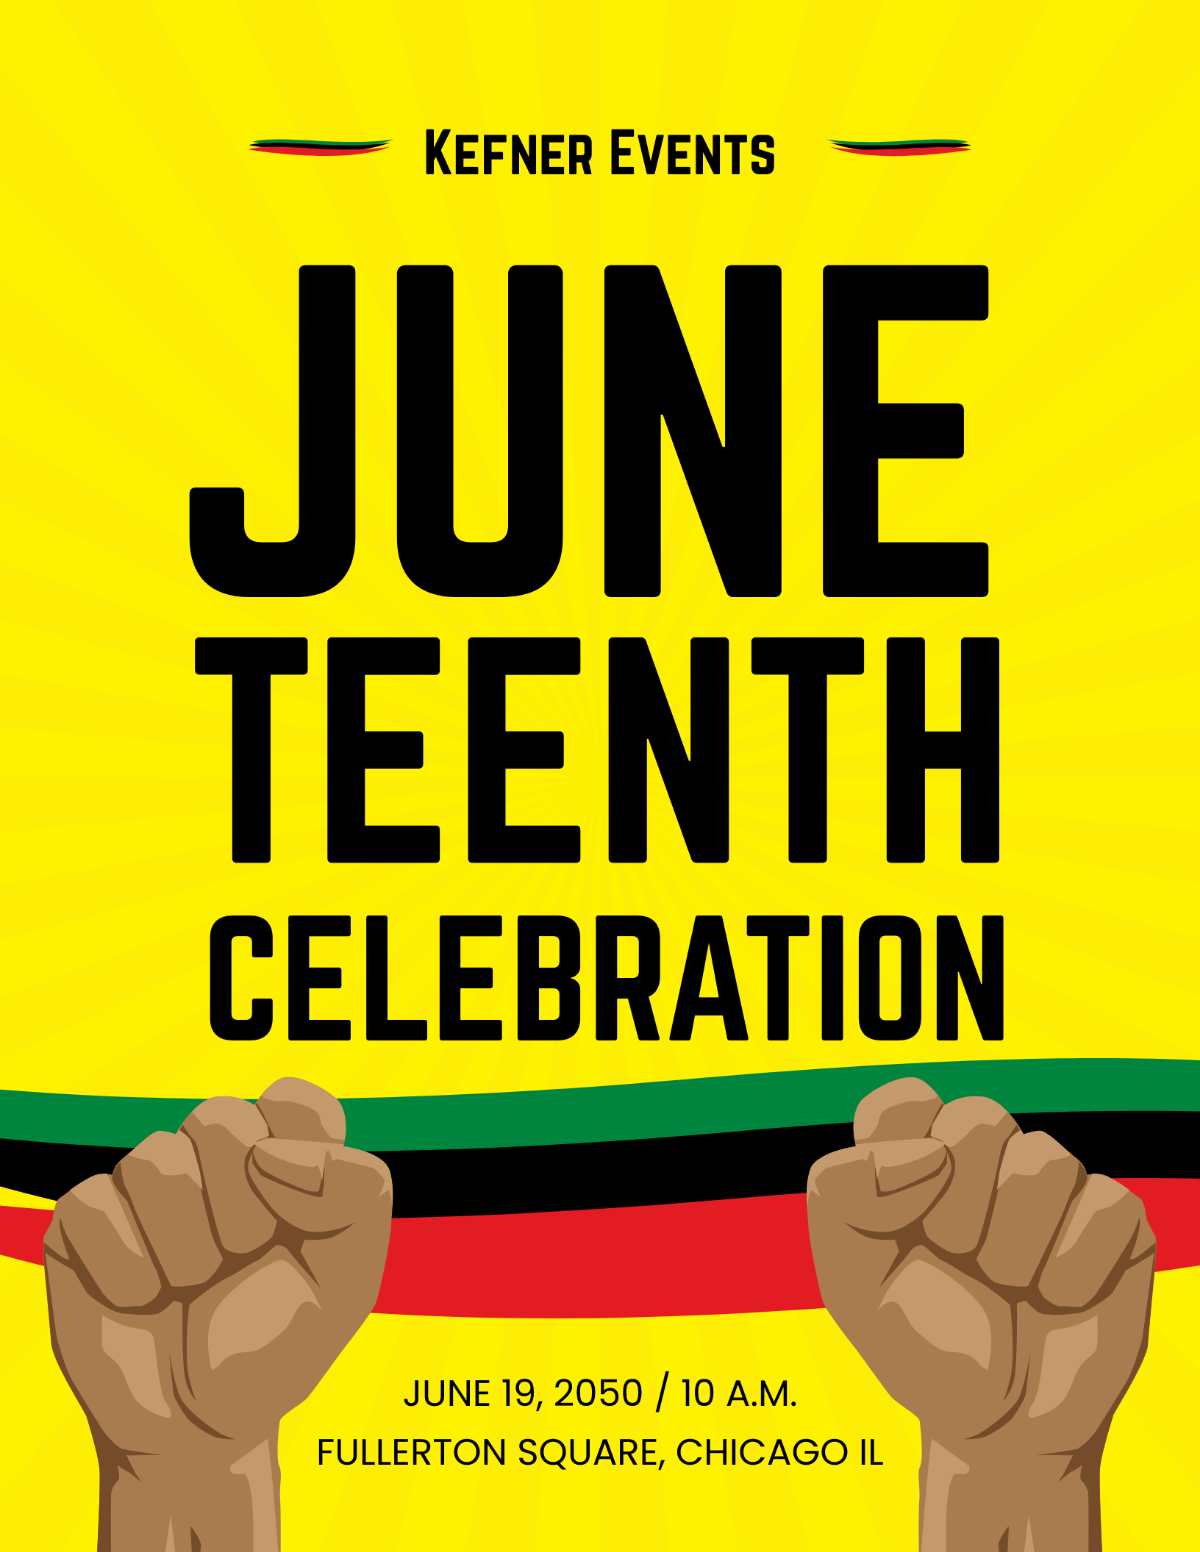 Juneteenth Celebration Flyer Template